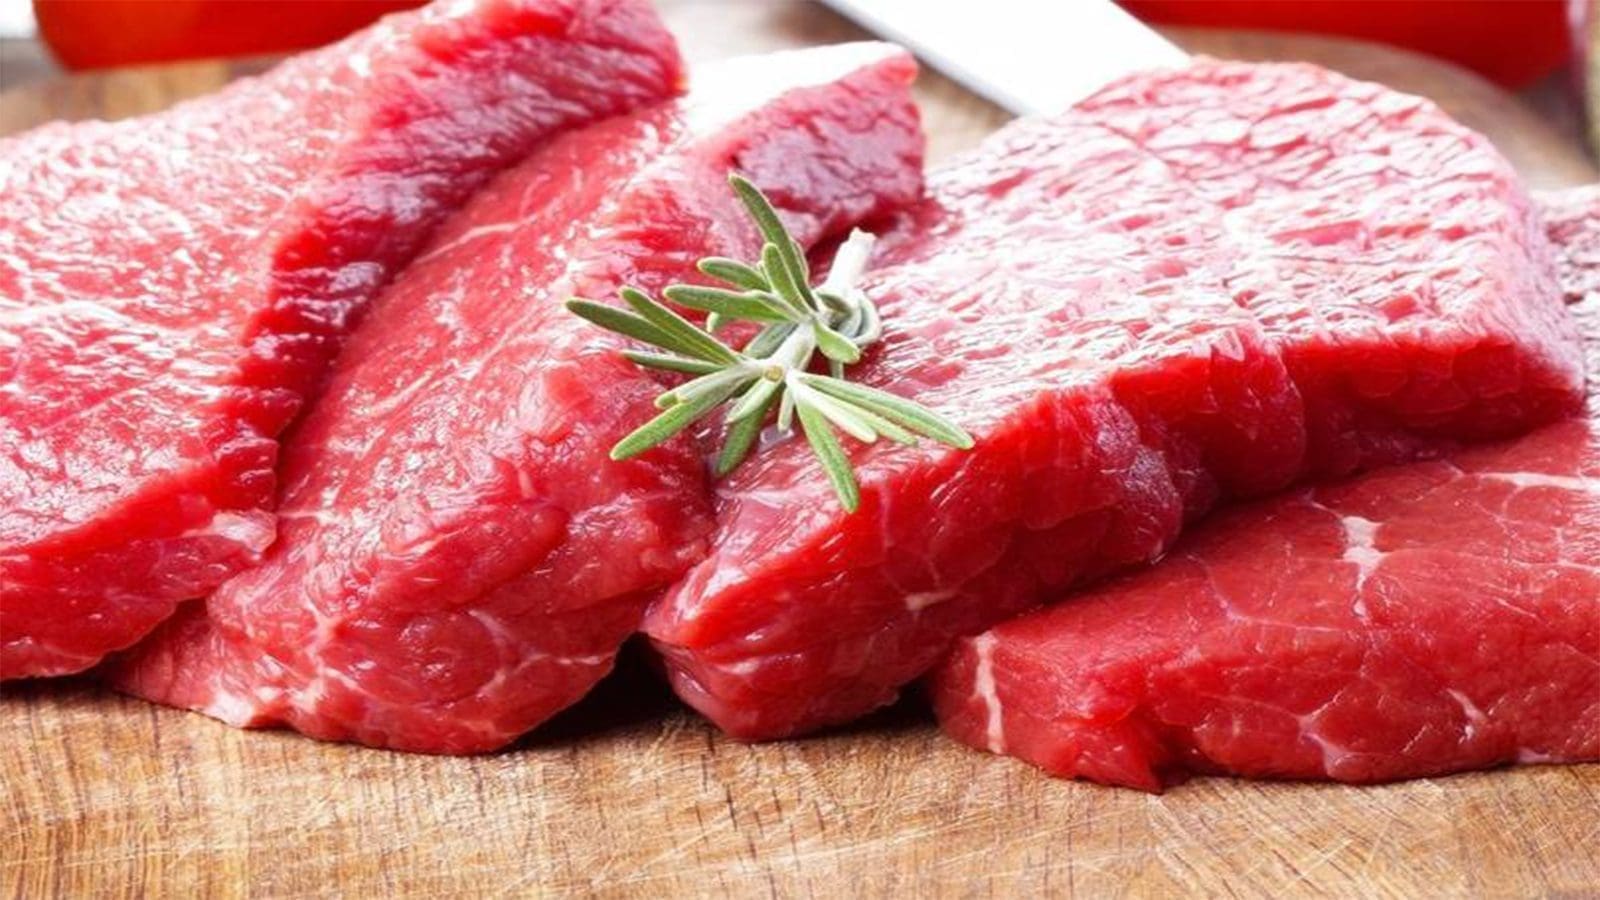  USDA’s FSIS revolutionizes beef safety testing with cutting-edge chemistry